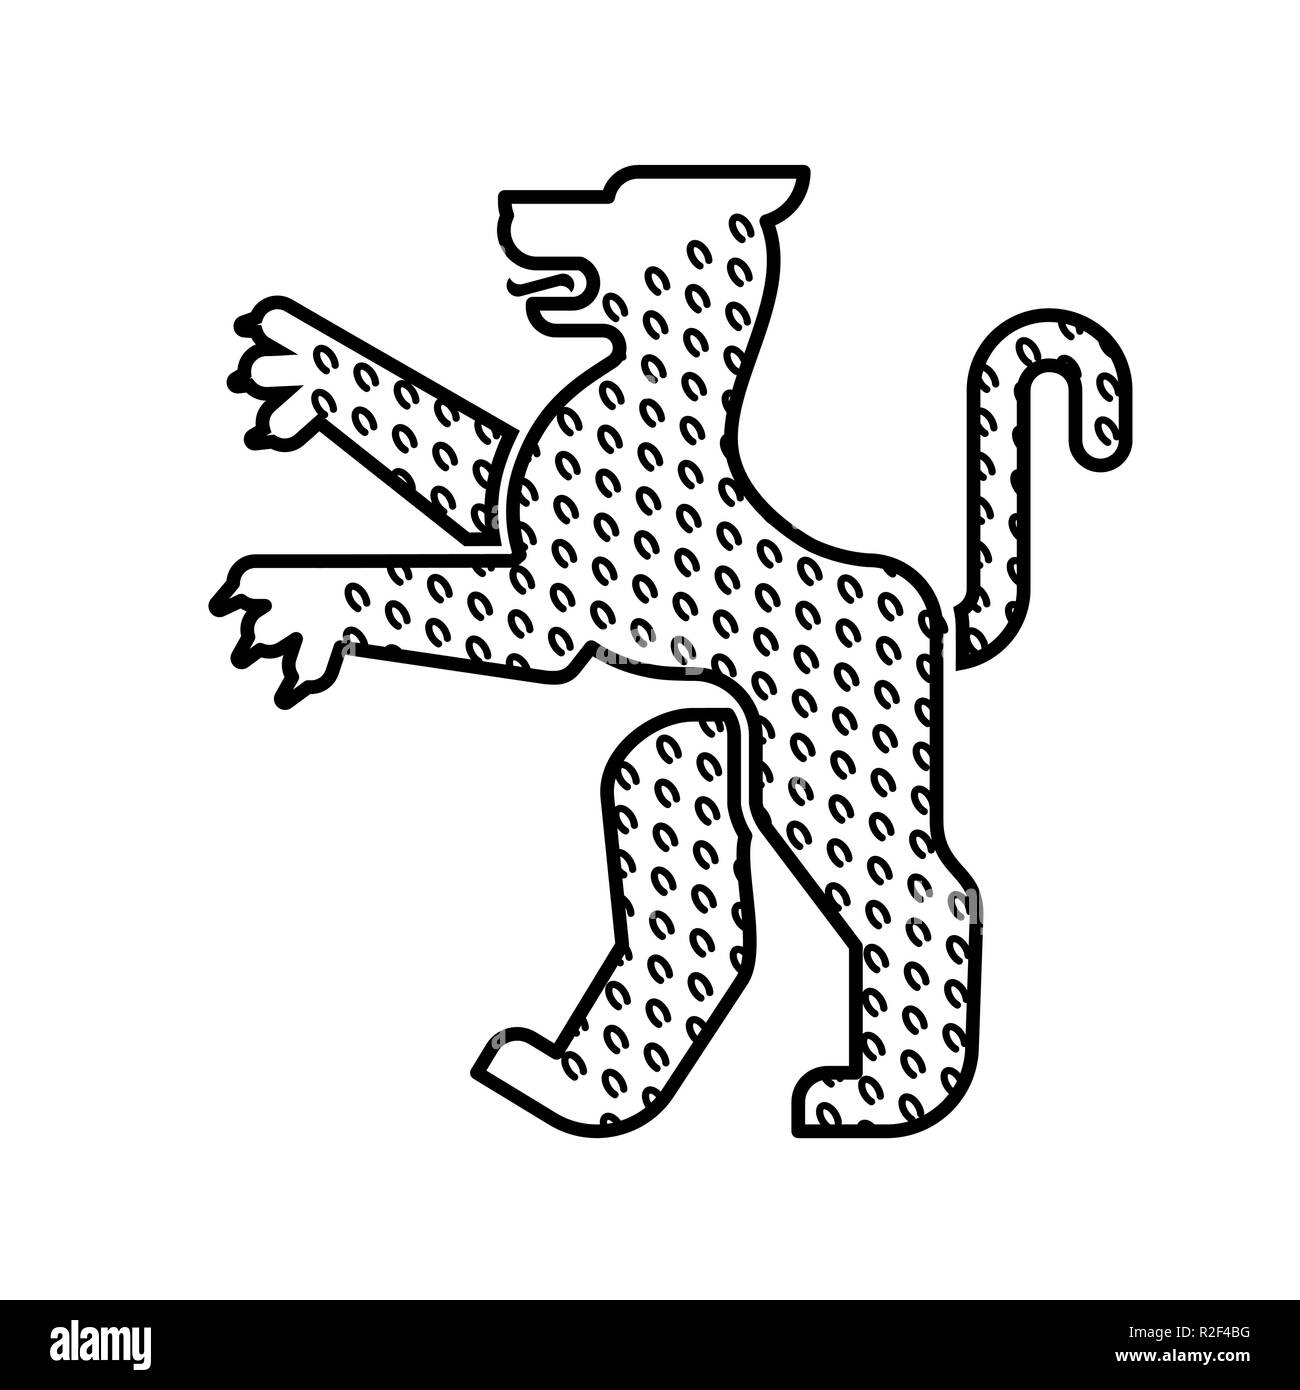 Leopard Heraldic animal silhouette. Fantastic Beast. Monster for coat of arms. Heraldry design element. Stock Vector